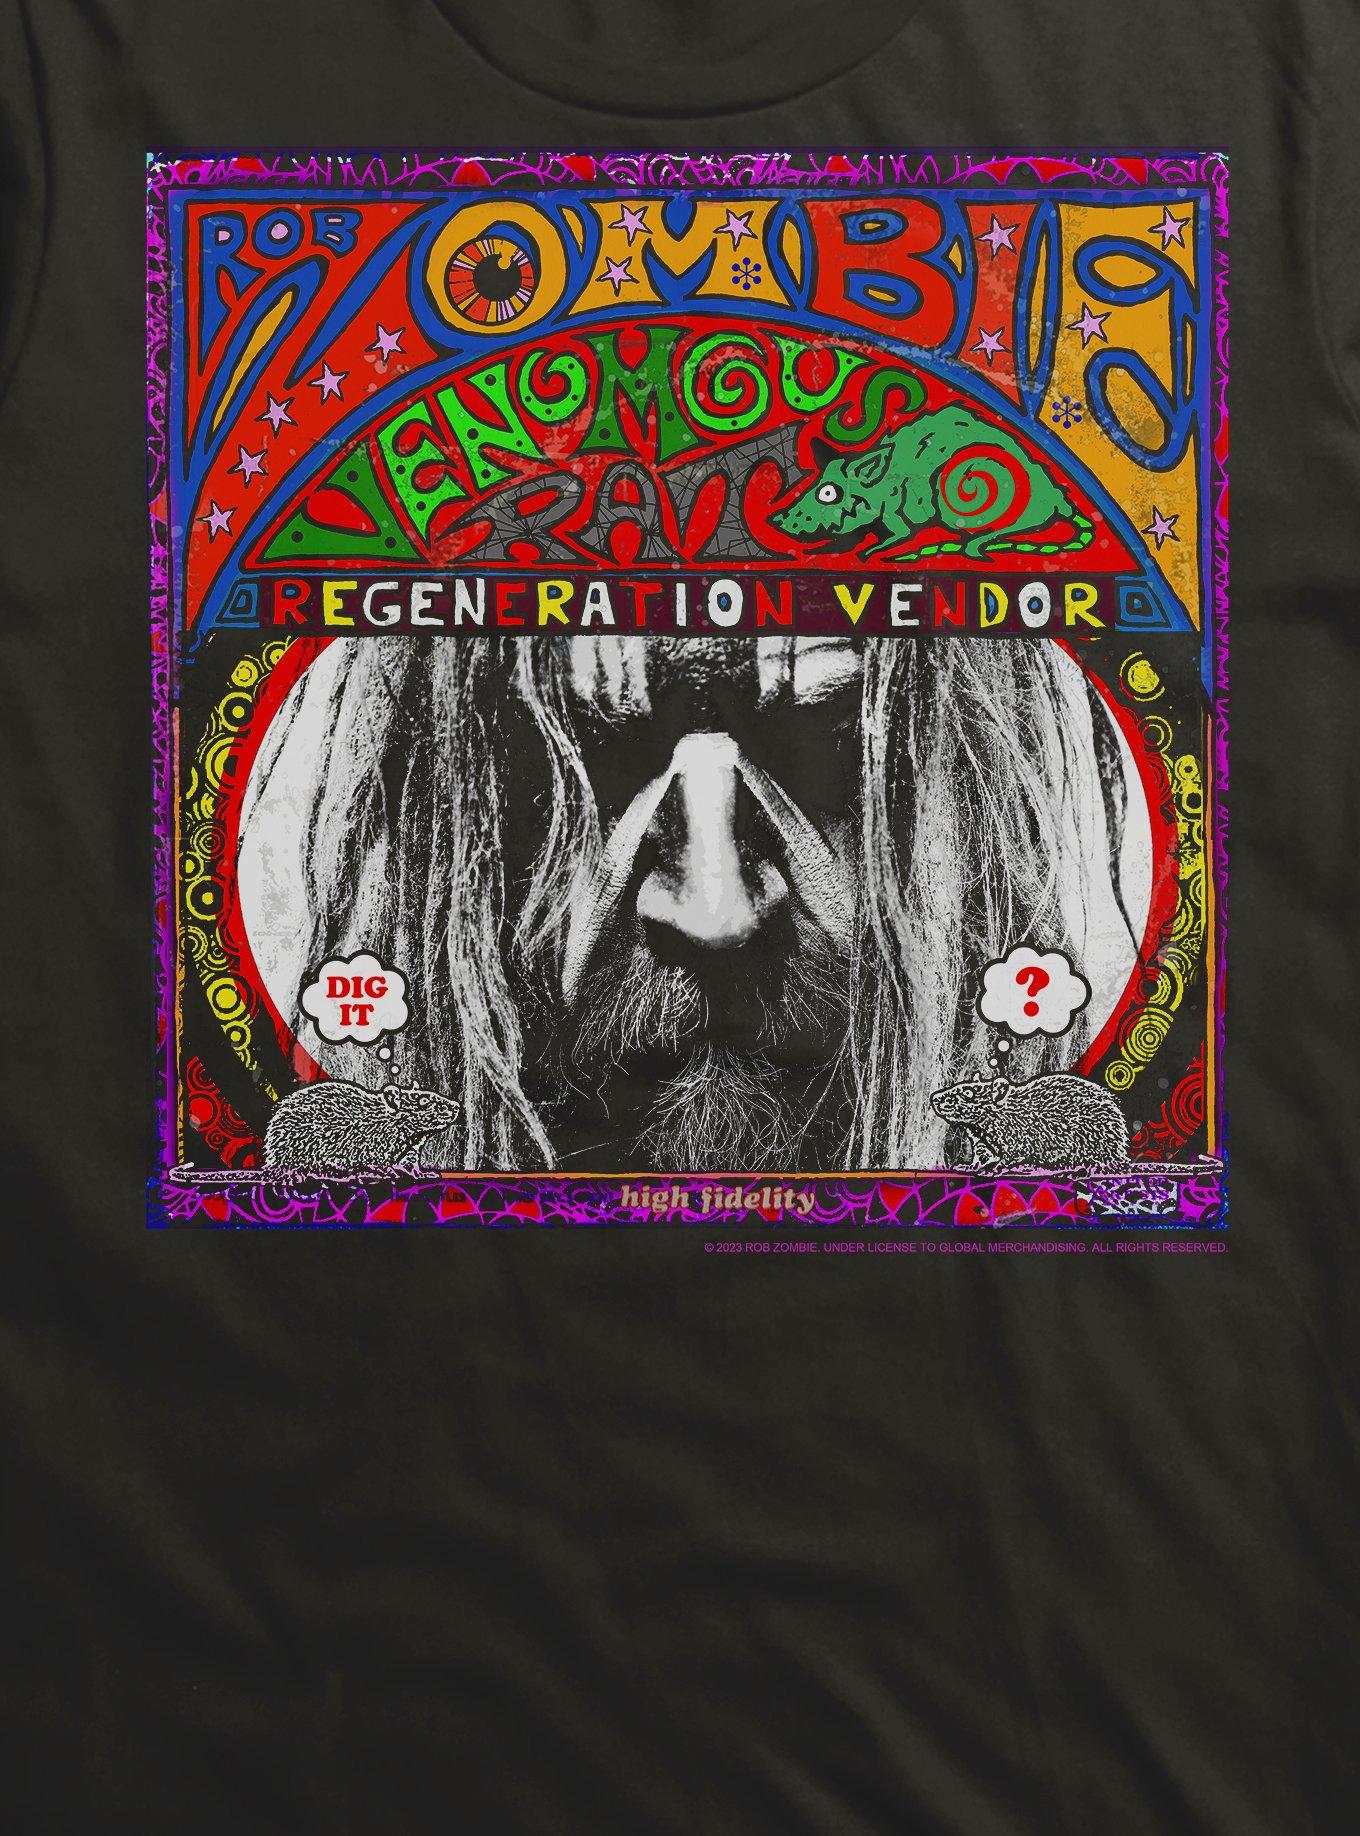 Rob Zombei Venomous Rat Regeneration Vendor T-Shirt, BLACK, alternate